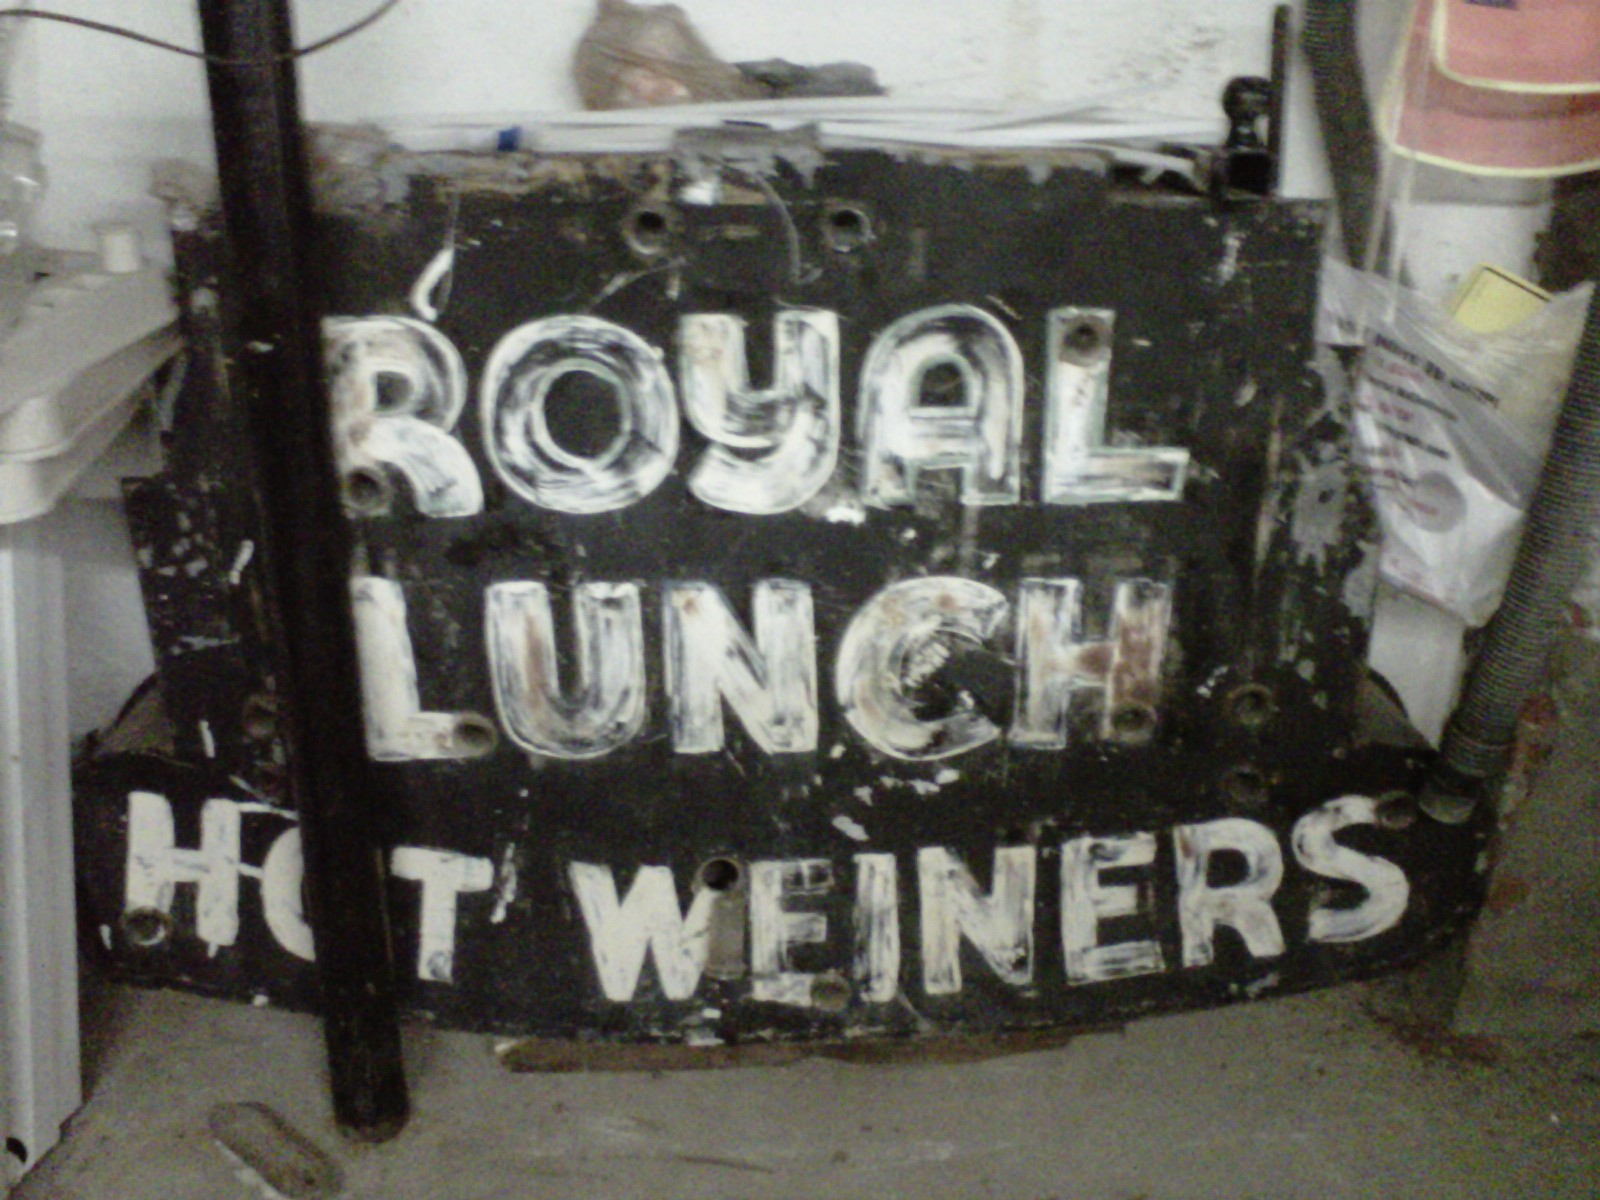 Royal Lunch - original sign